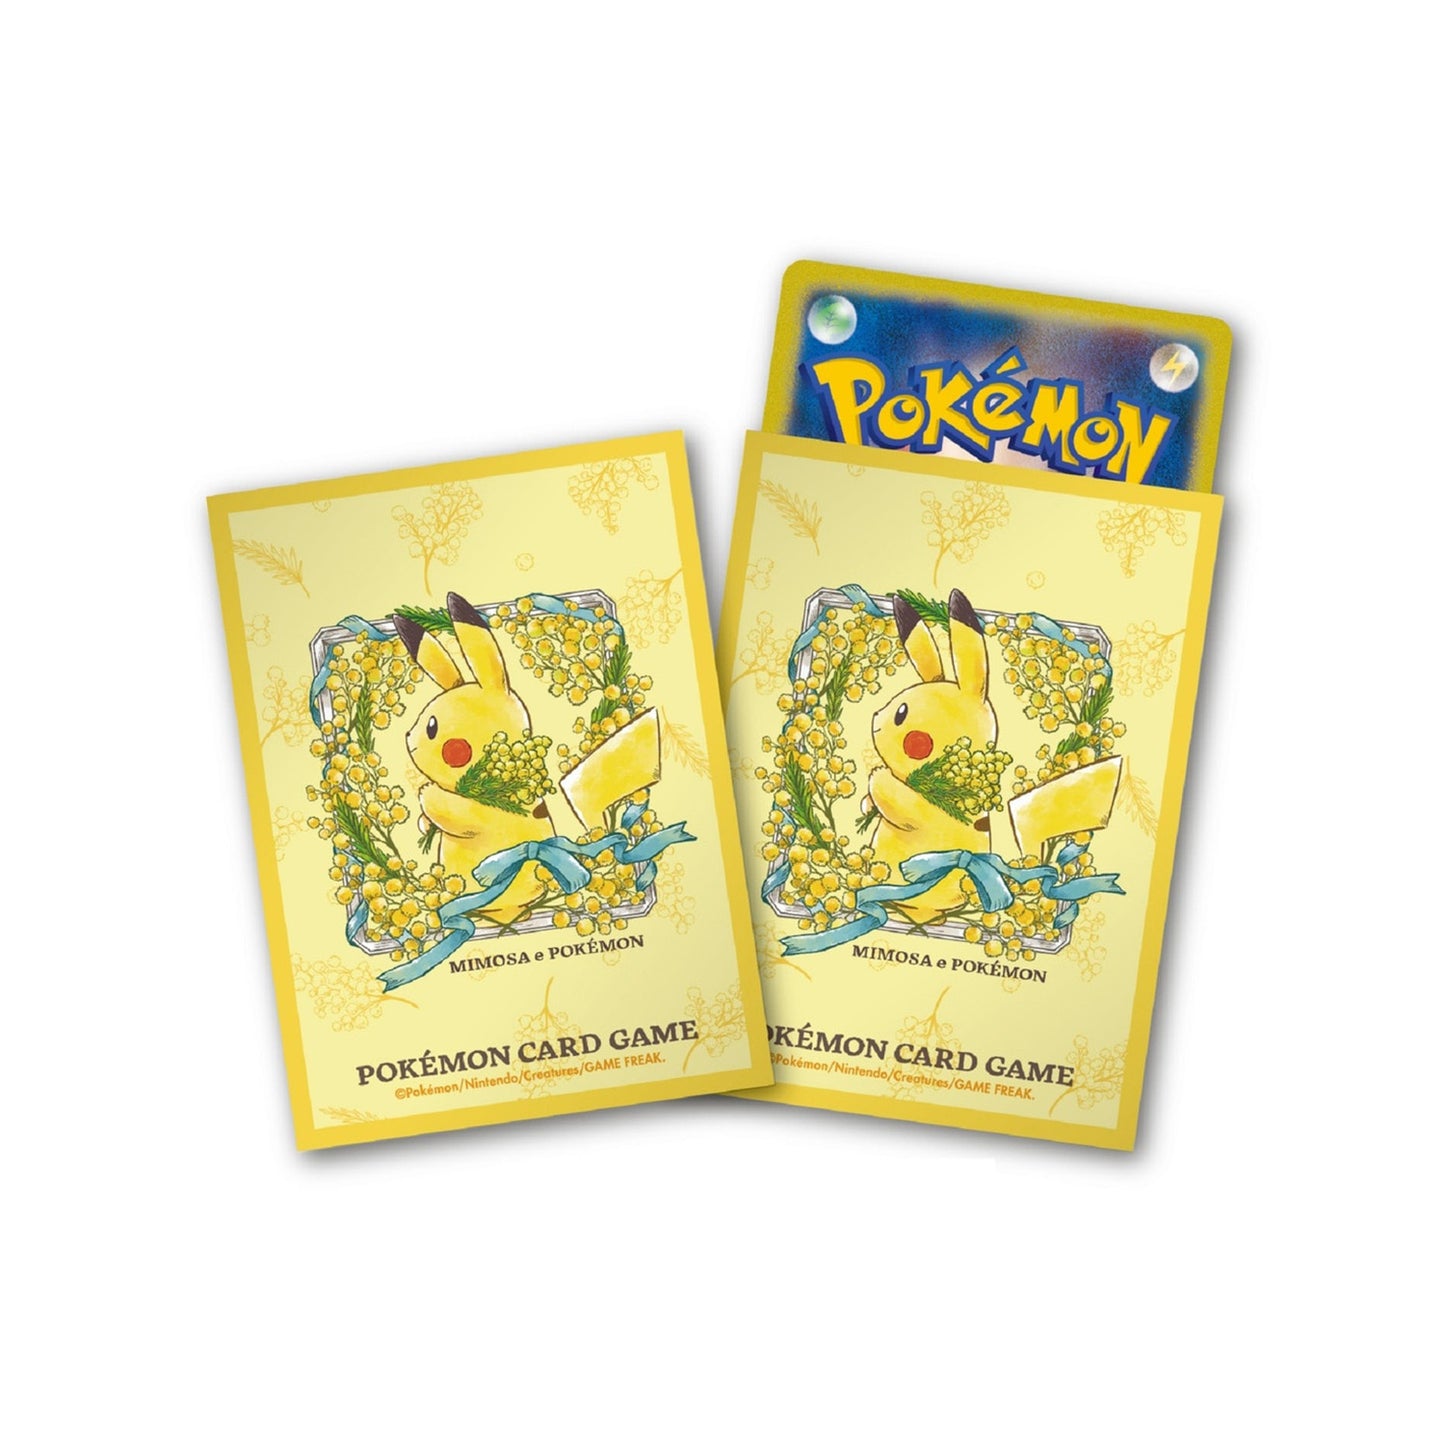 Pokémon Card Game Sleeves ｢MINOSA e POKÉMON｣